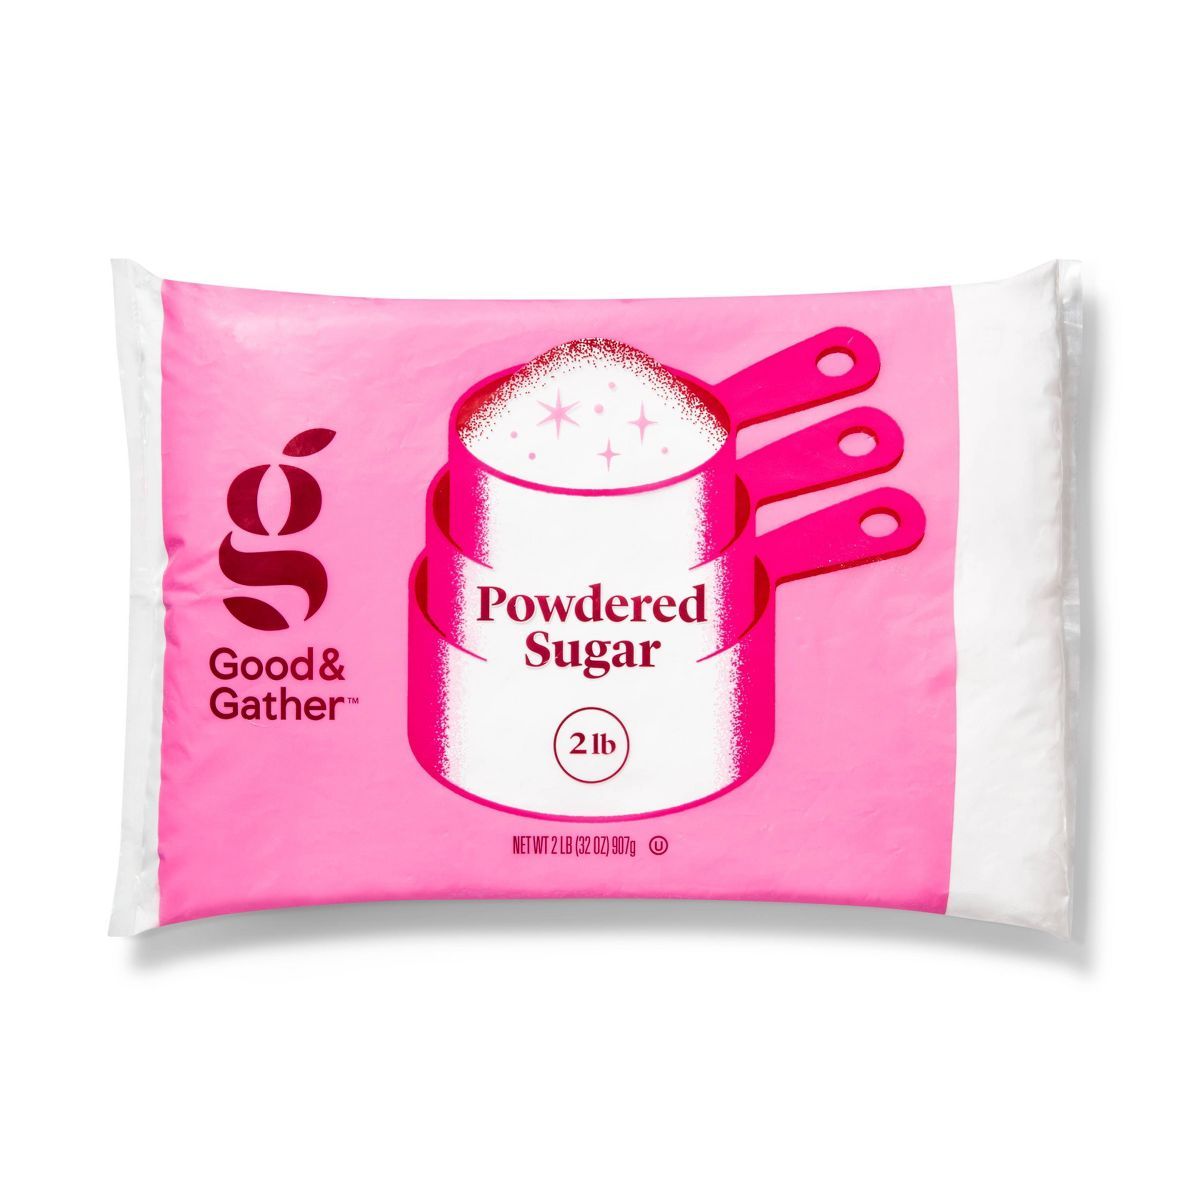 Powdered Sugar - 2lbs - Good & Gather™ | Target